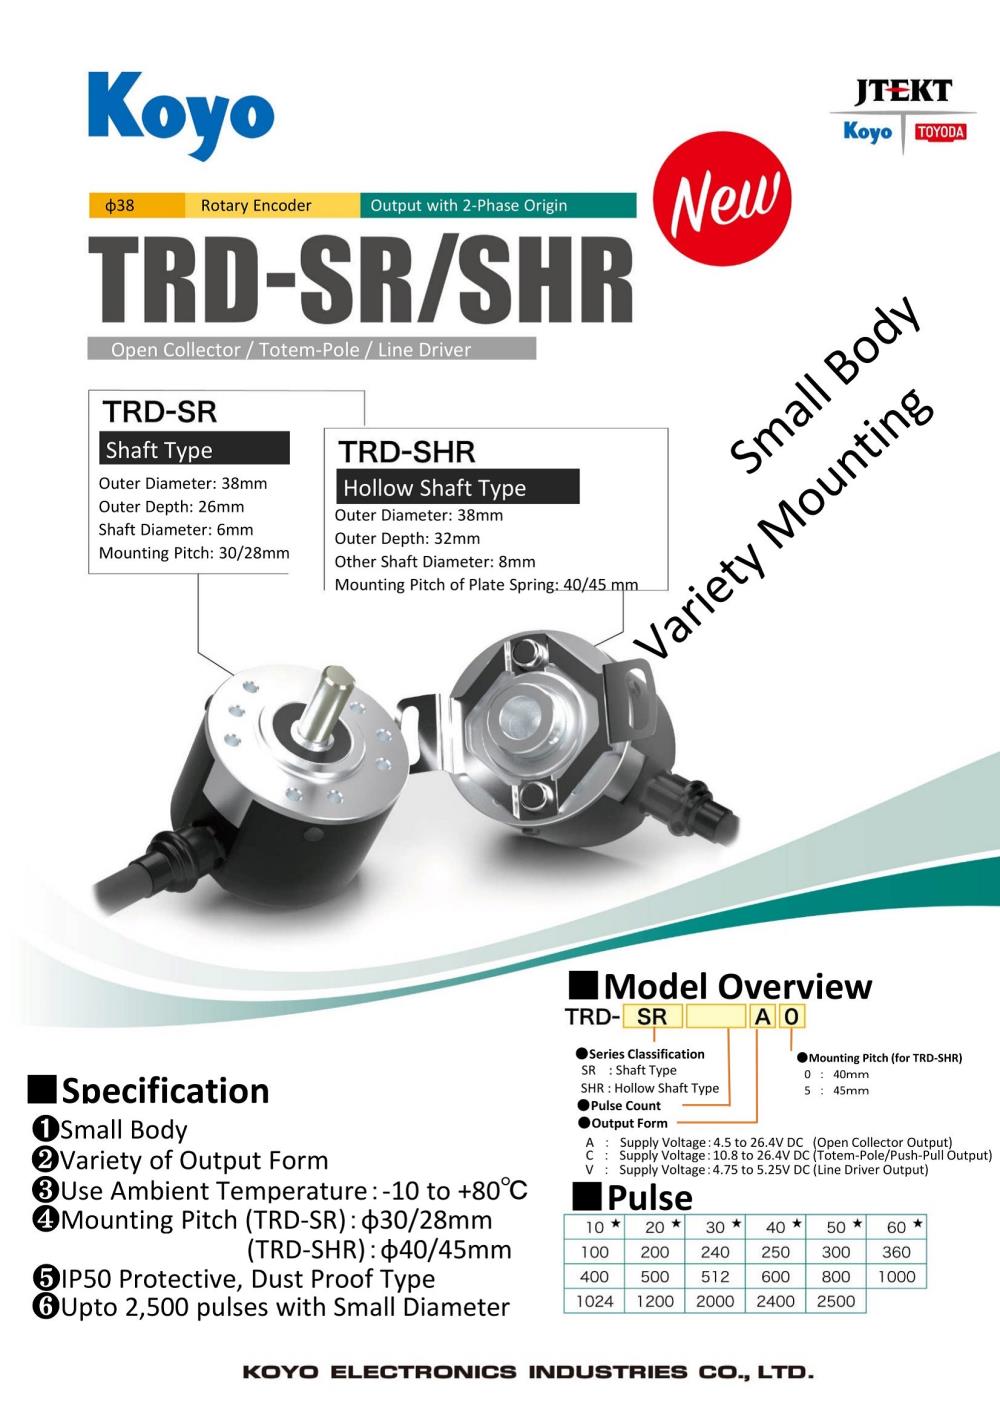 JTEKT (KOYO) Rotary Encoder TRD-SR-A Series